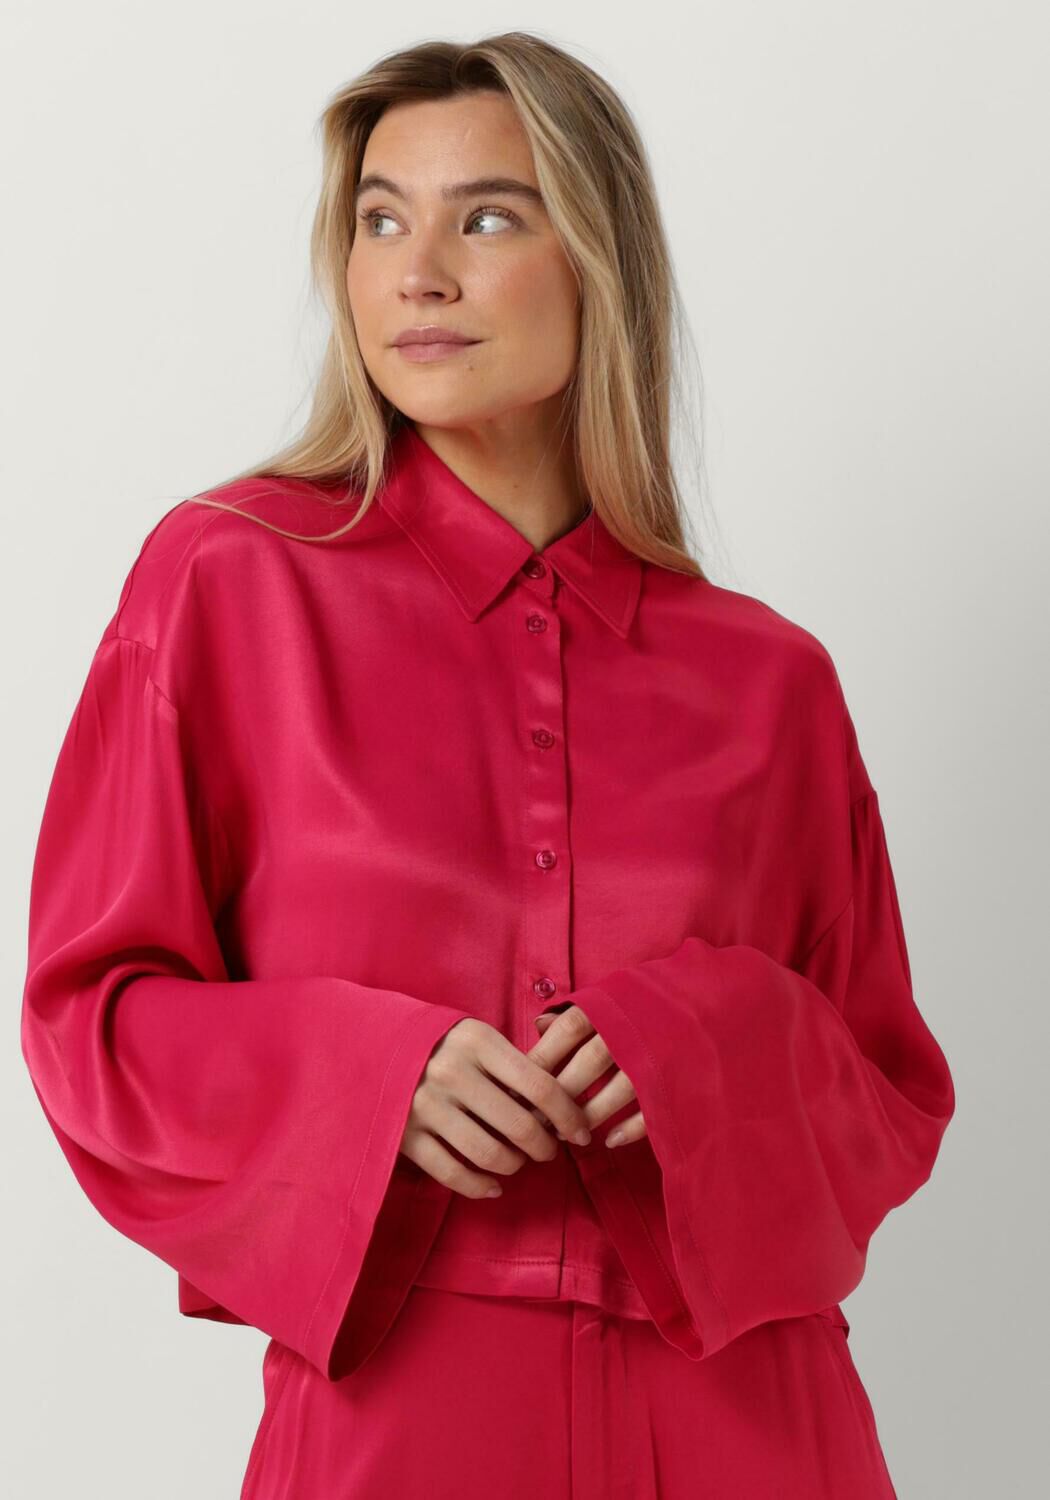 ALIX THE LABEL Dames Blouses Ladies Woven Kimono Sleeve Blouse Roze